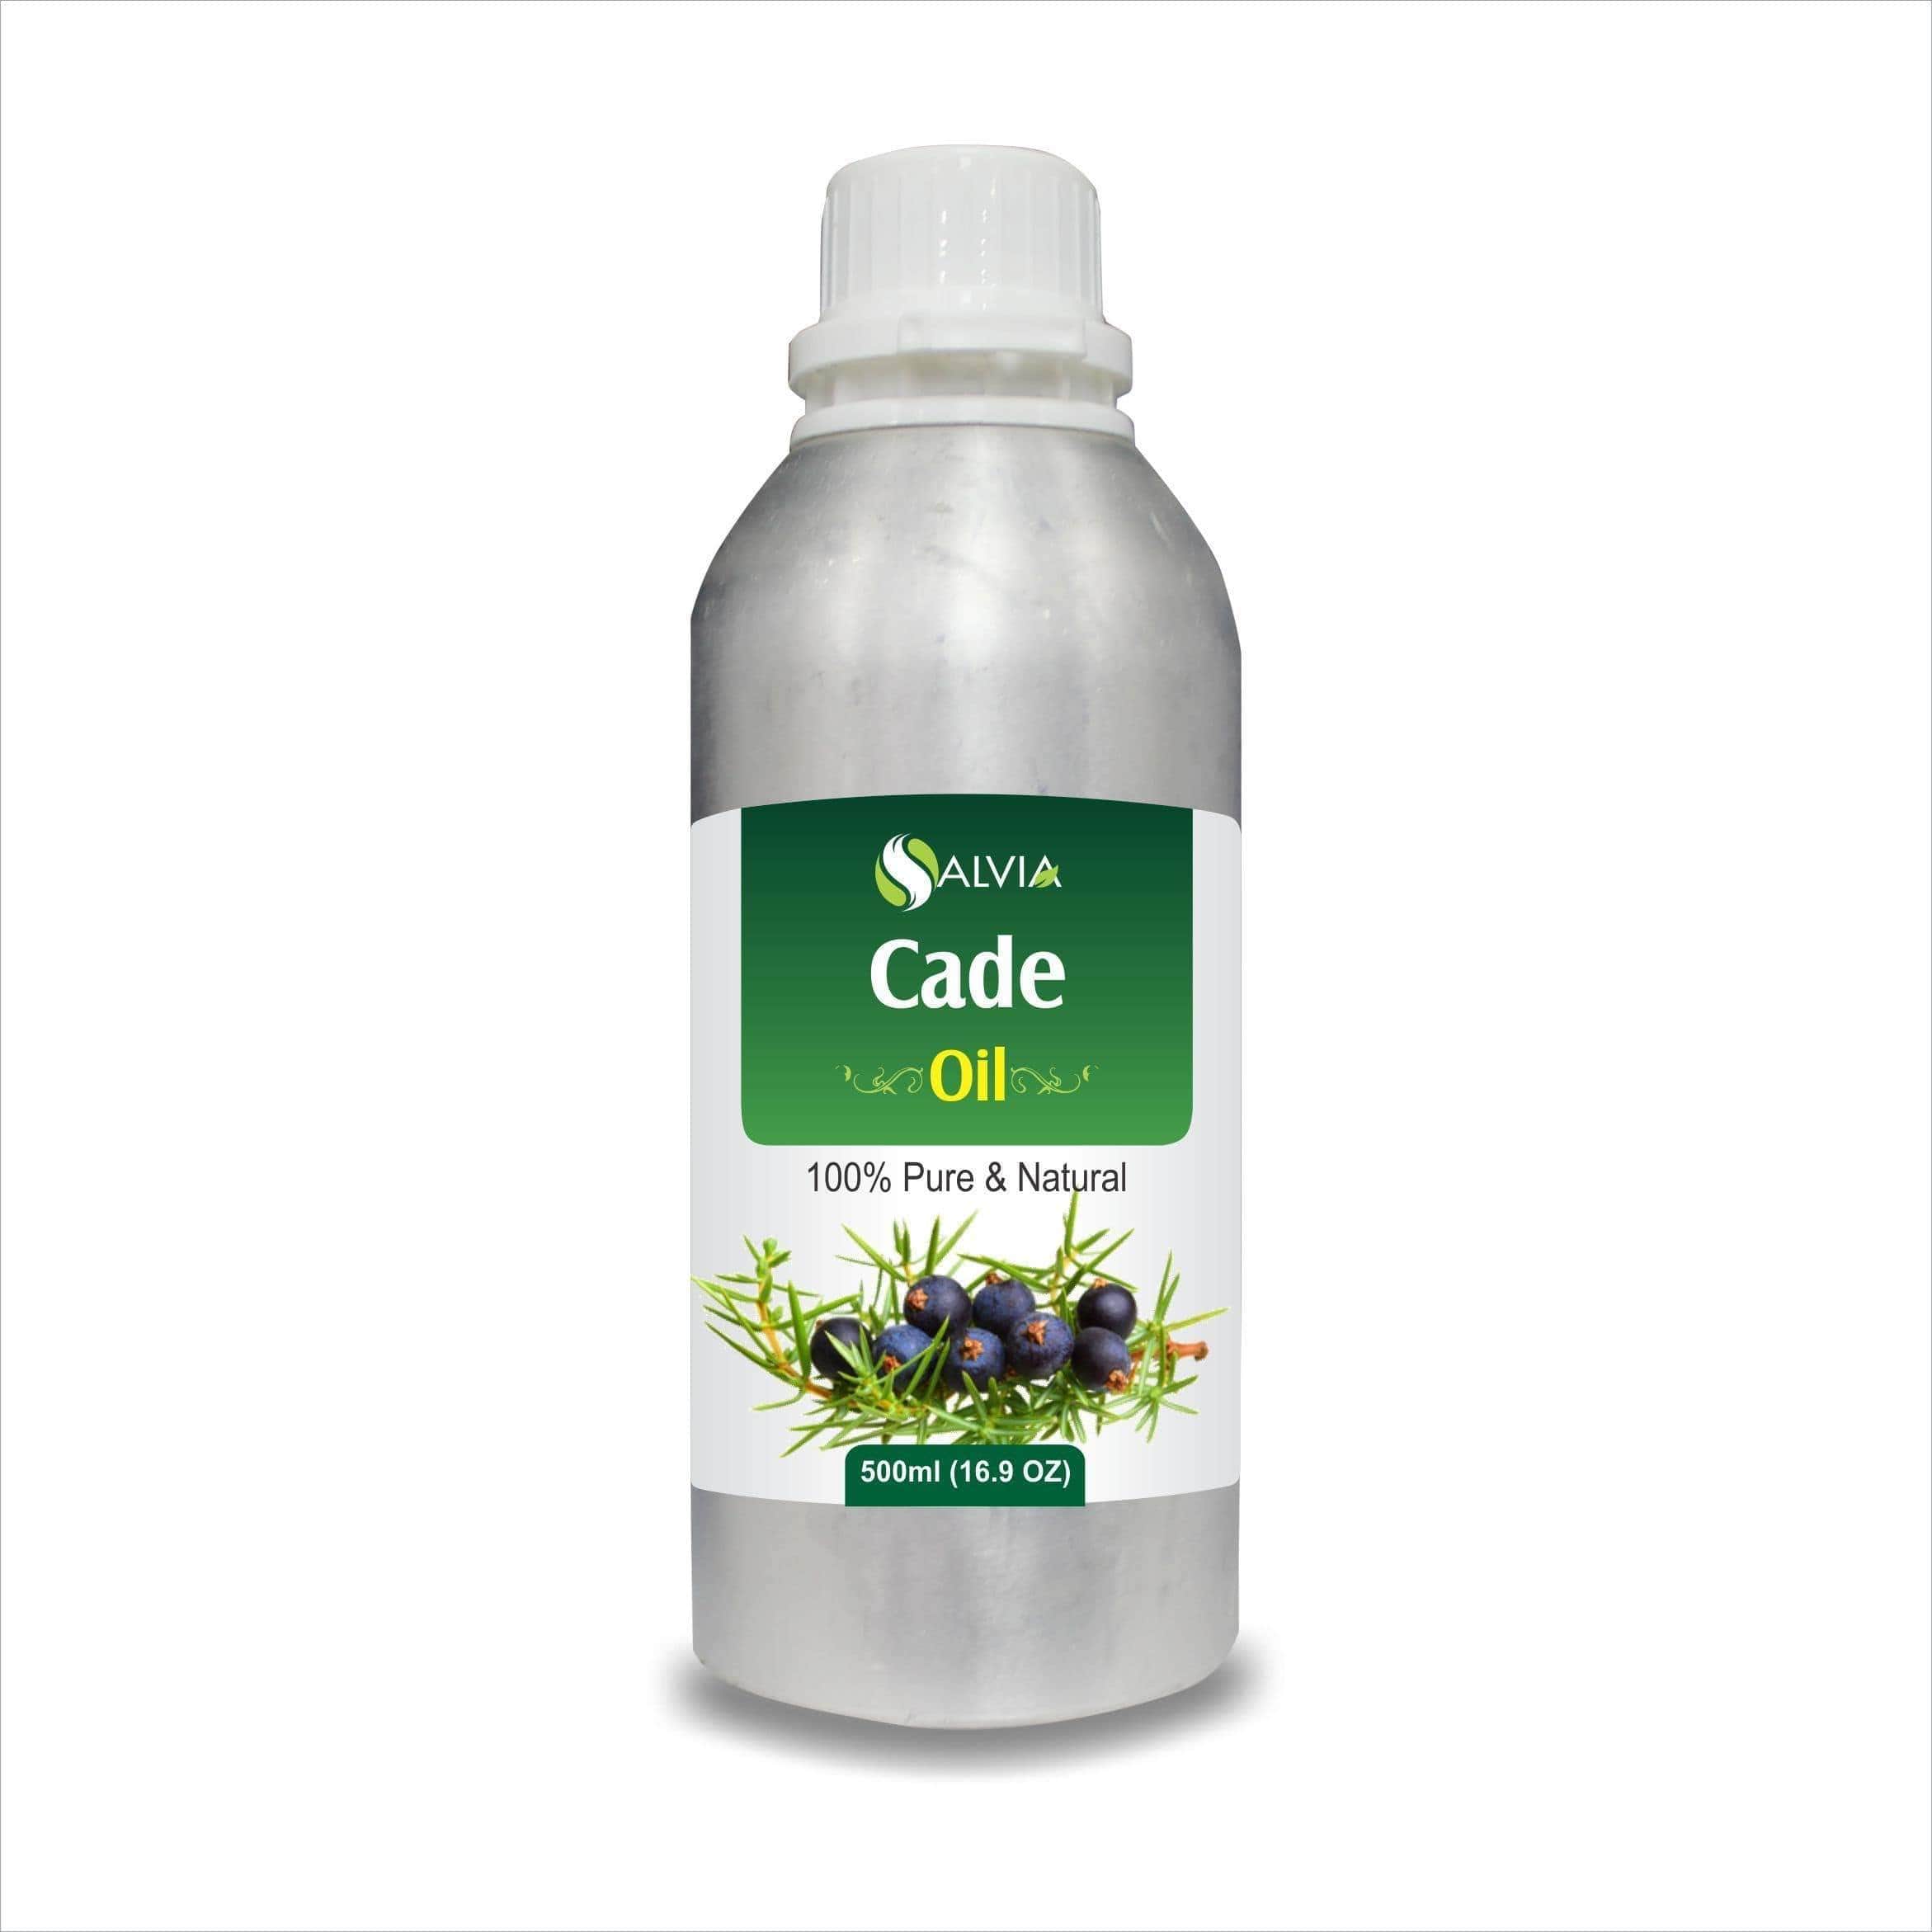 cade oil uses